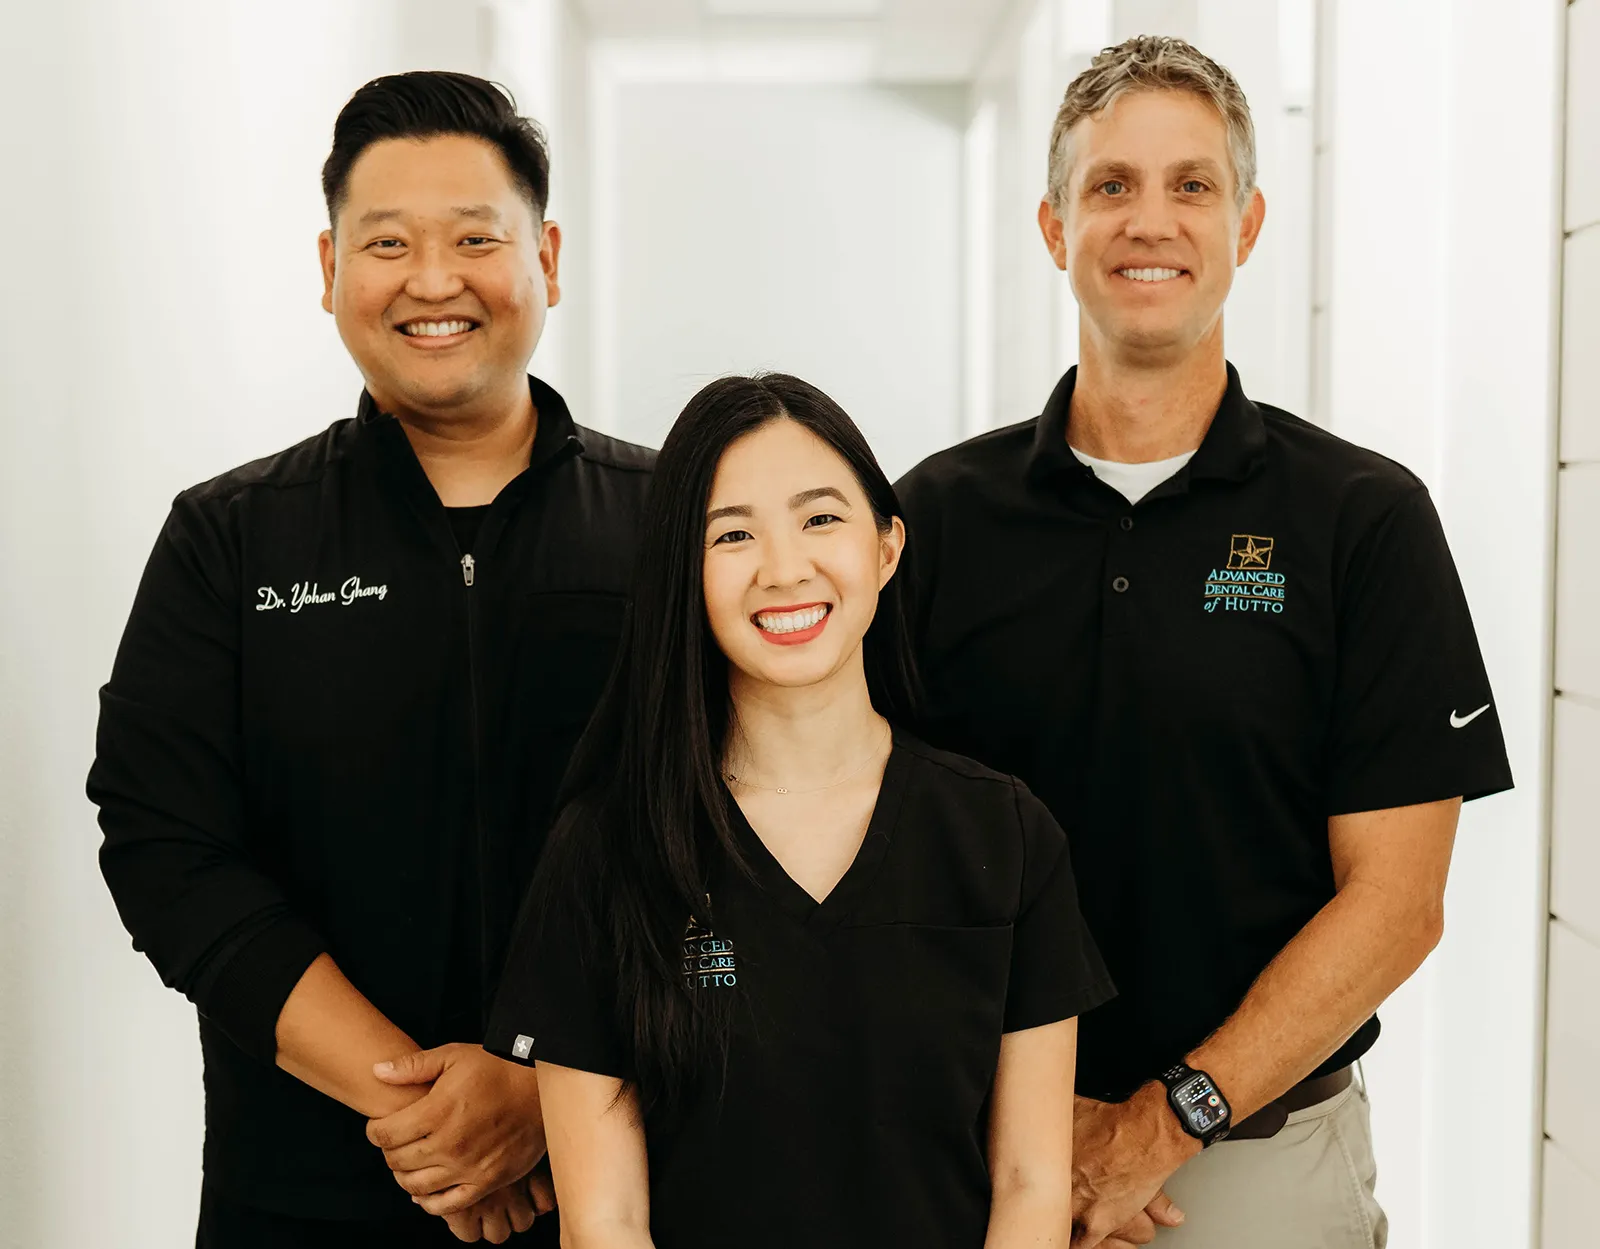 Advanced Dental Care of Hutto Team